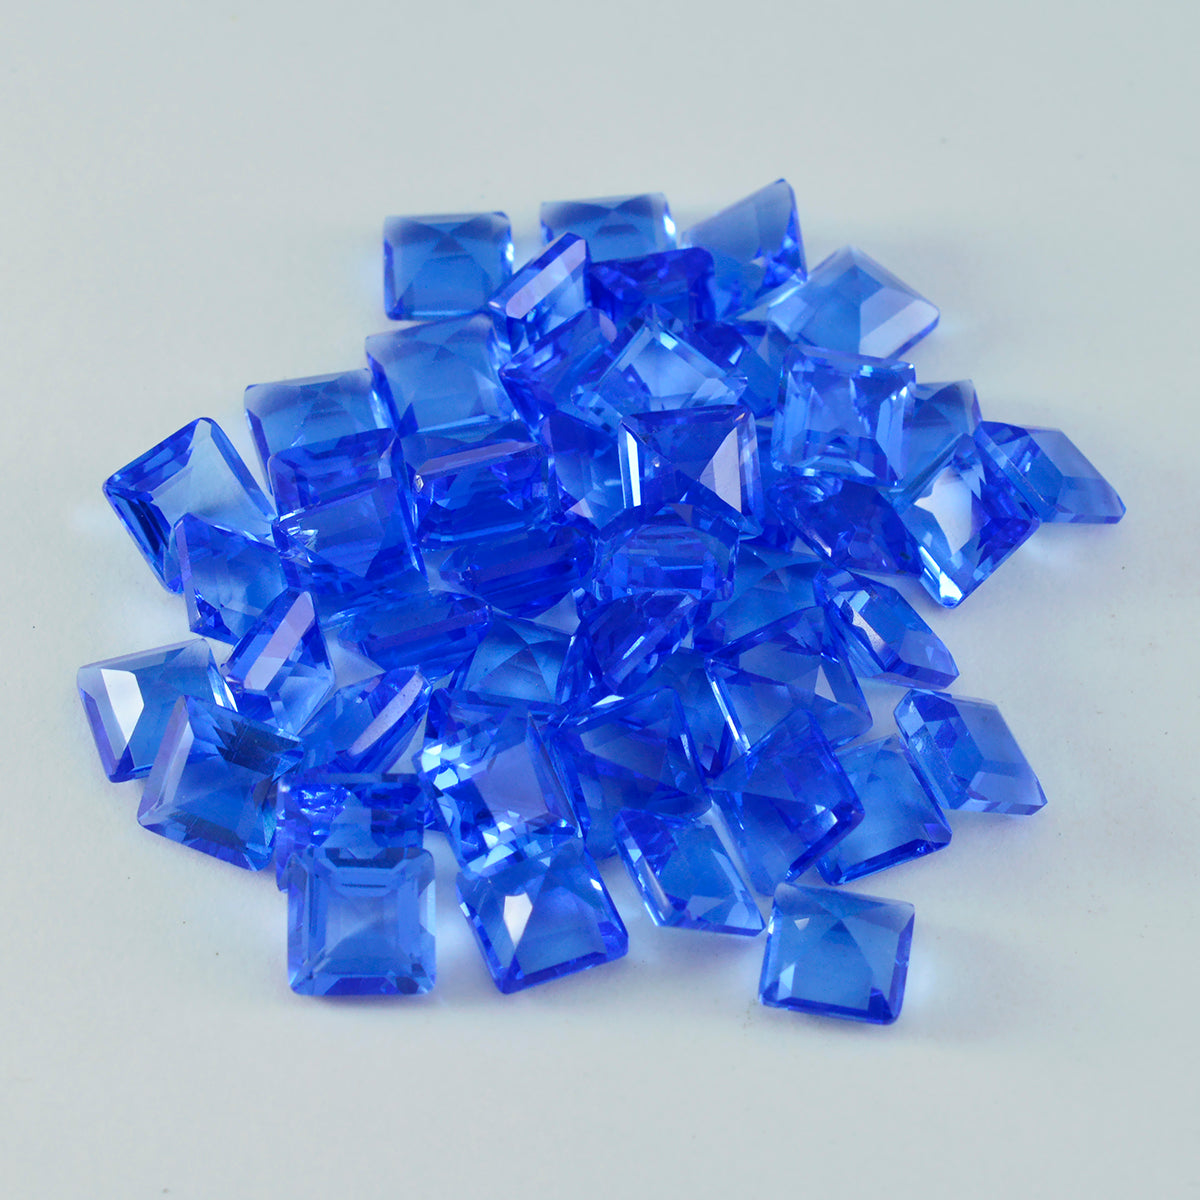 Riyogems 1PC Blue Sapphire CZ Faceted 6x6 mm Square Shape Nice Quality Gem